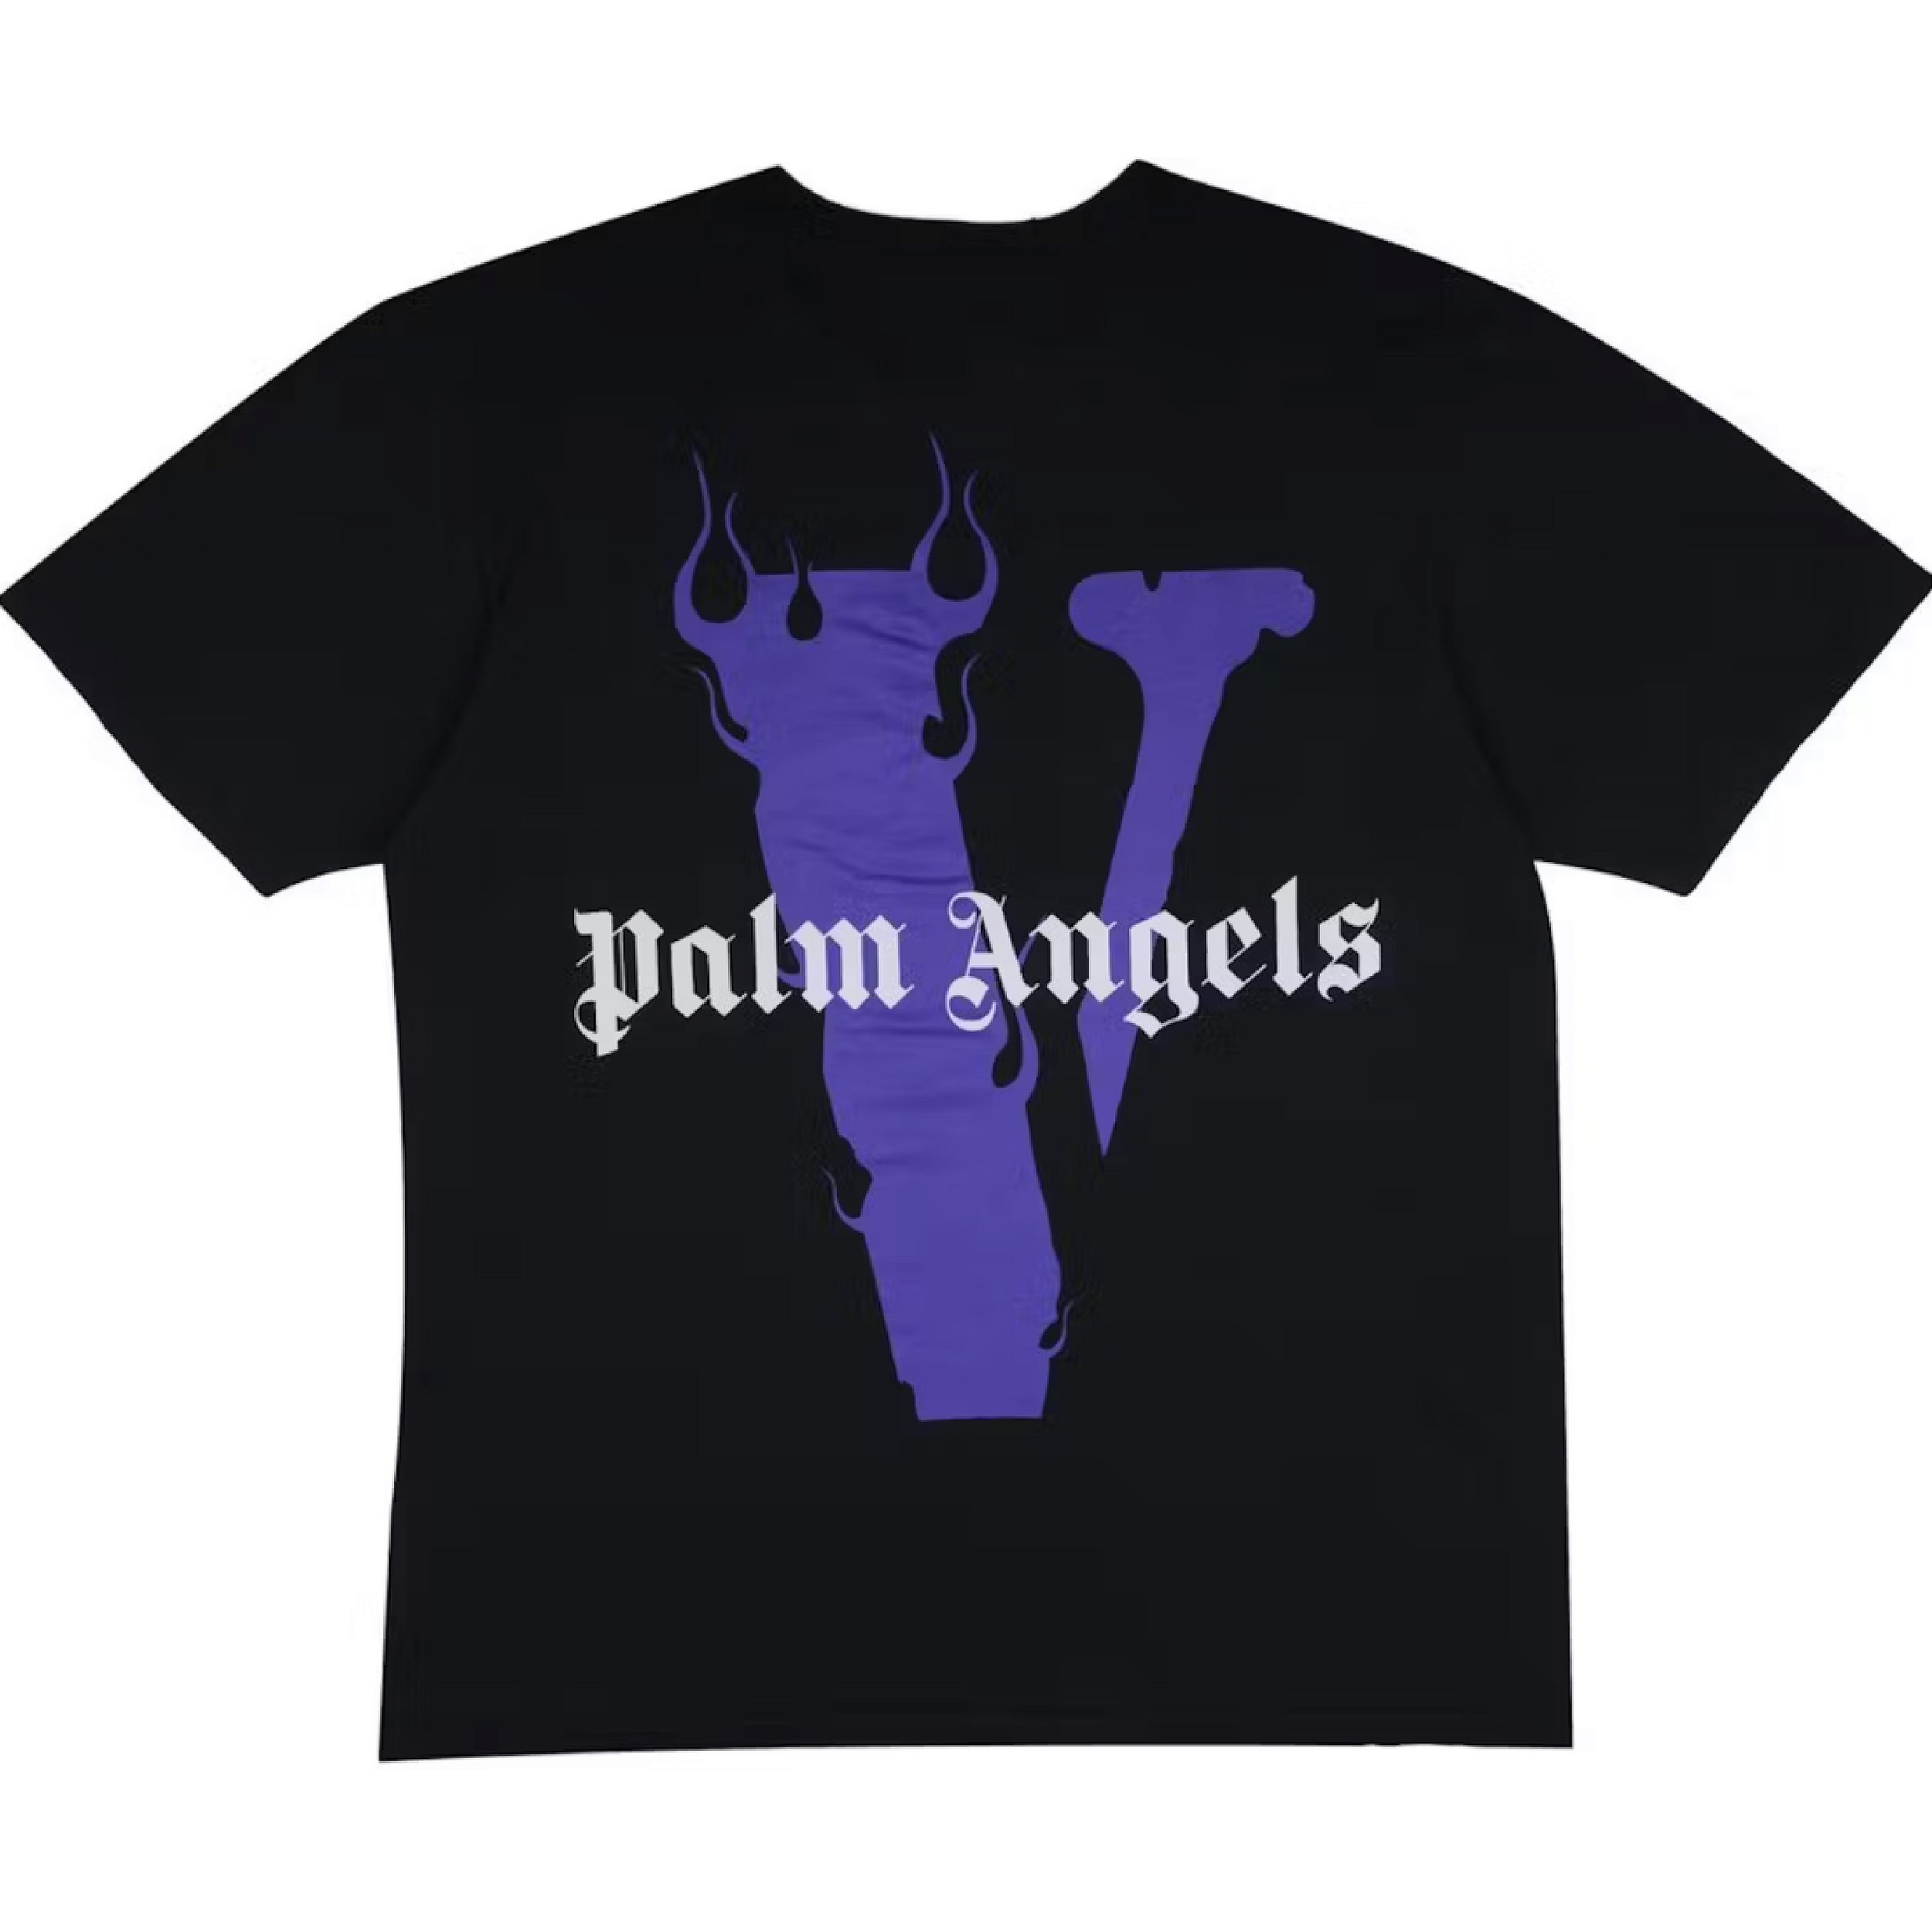 Vlone x Palm Angels T-shirt Black/Purple - Light Up Co. - Hype